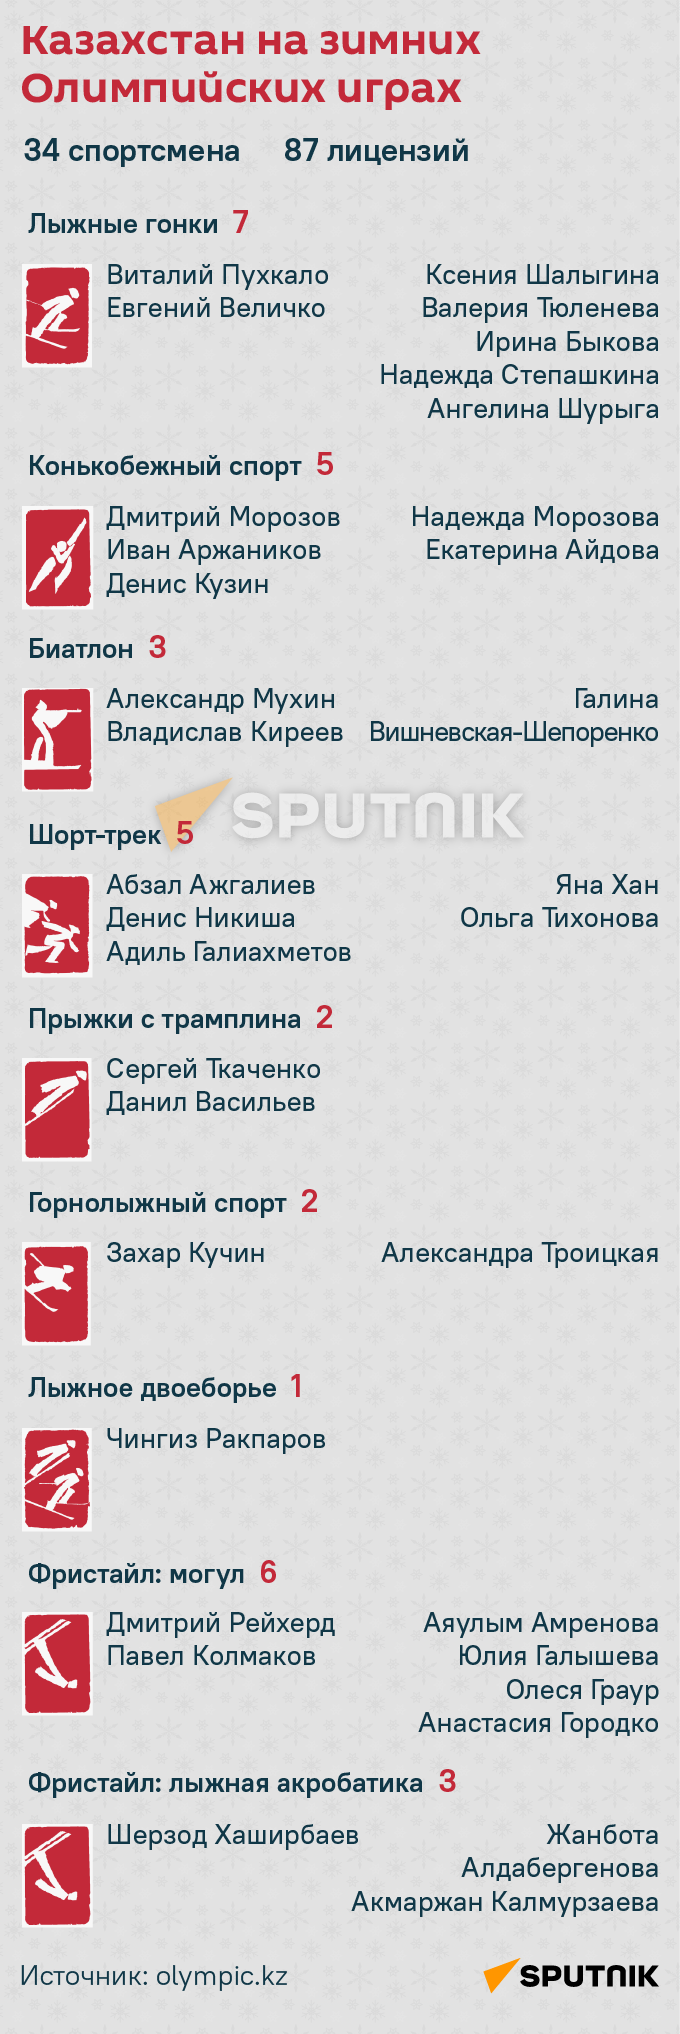 Олимпиада - Sputnik Казахстан